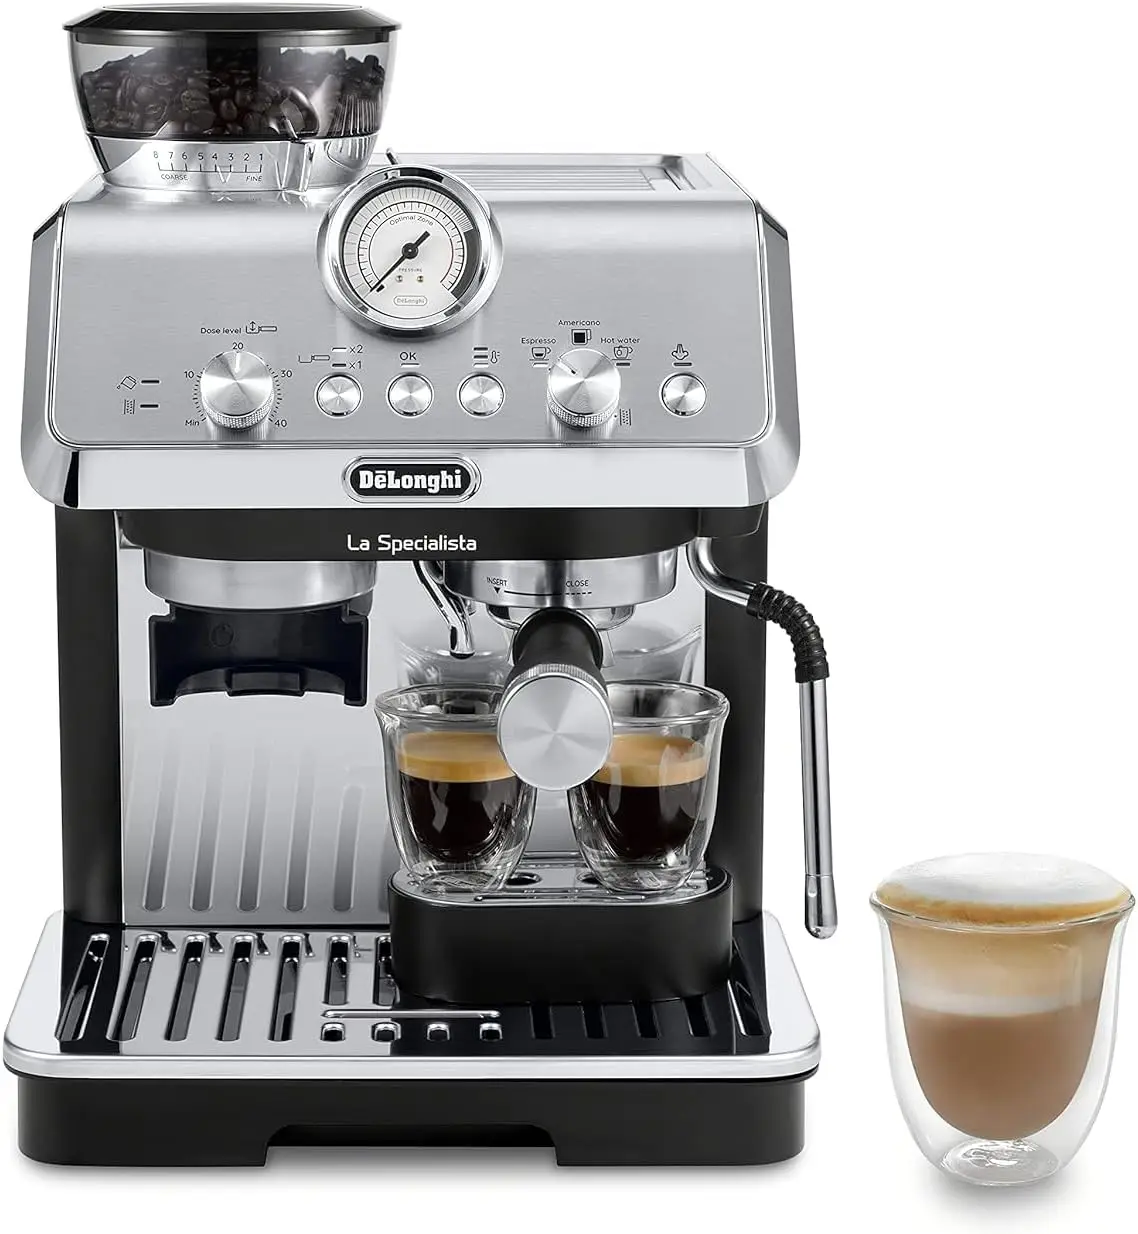 

De'Longhi La Specialista Espresso Machine with Grinder, Milk Frother, 1450W, Barista Kit - Bean to Cup Coffee & Cappuccino Maker